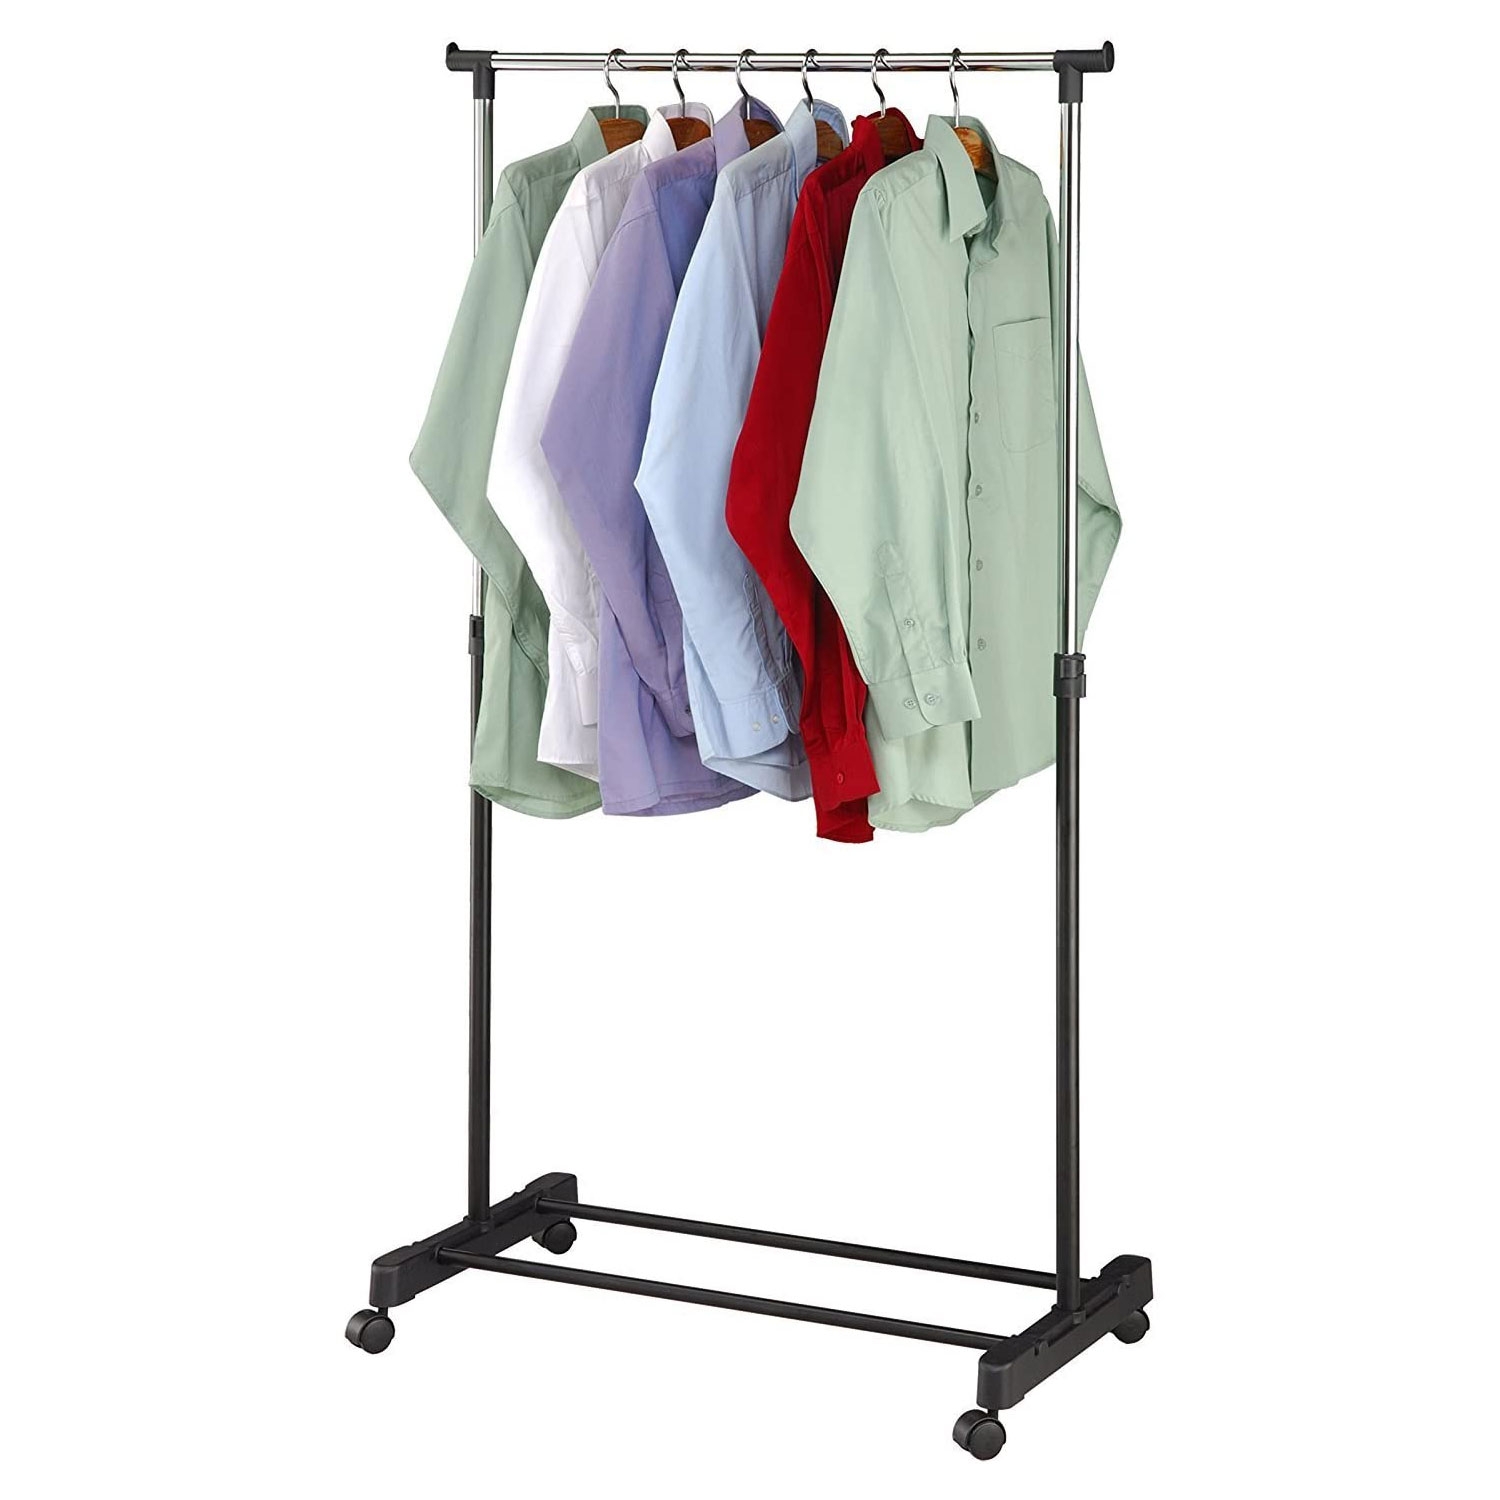 Sunbeam - Rolling garment rack. Colour: grey